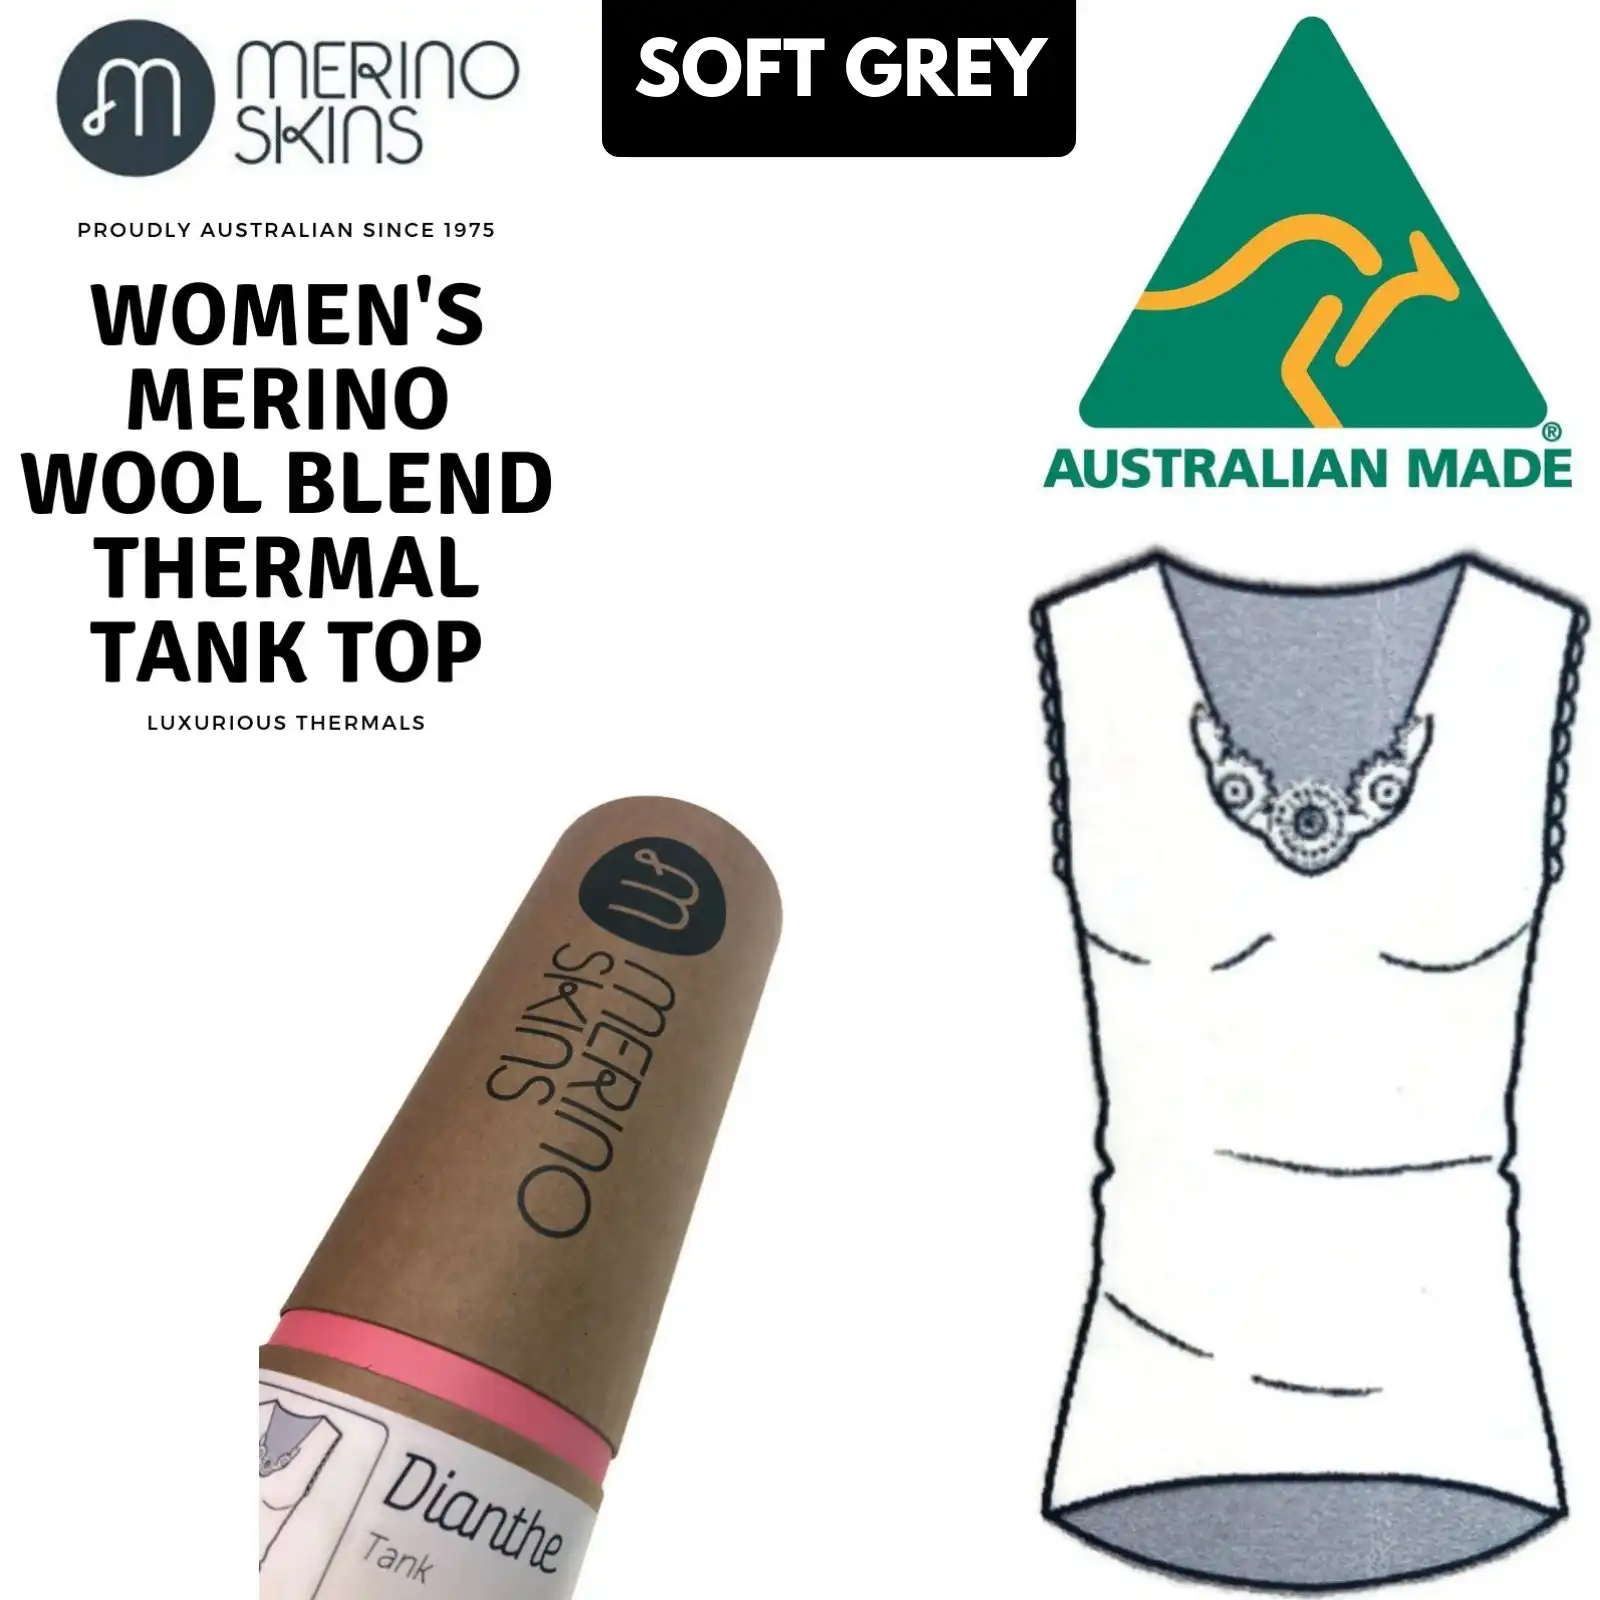 Merino Skins Ladies Dianthe Tank Top Thermal Merino Wool Rich Thermals - Soft Grey Marle